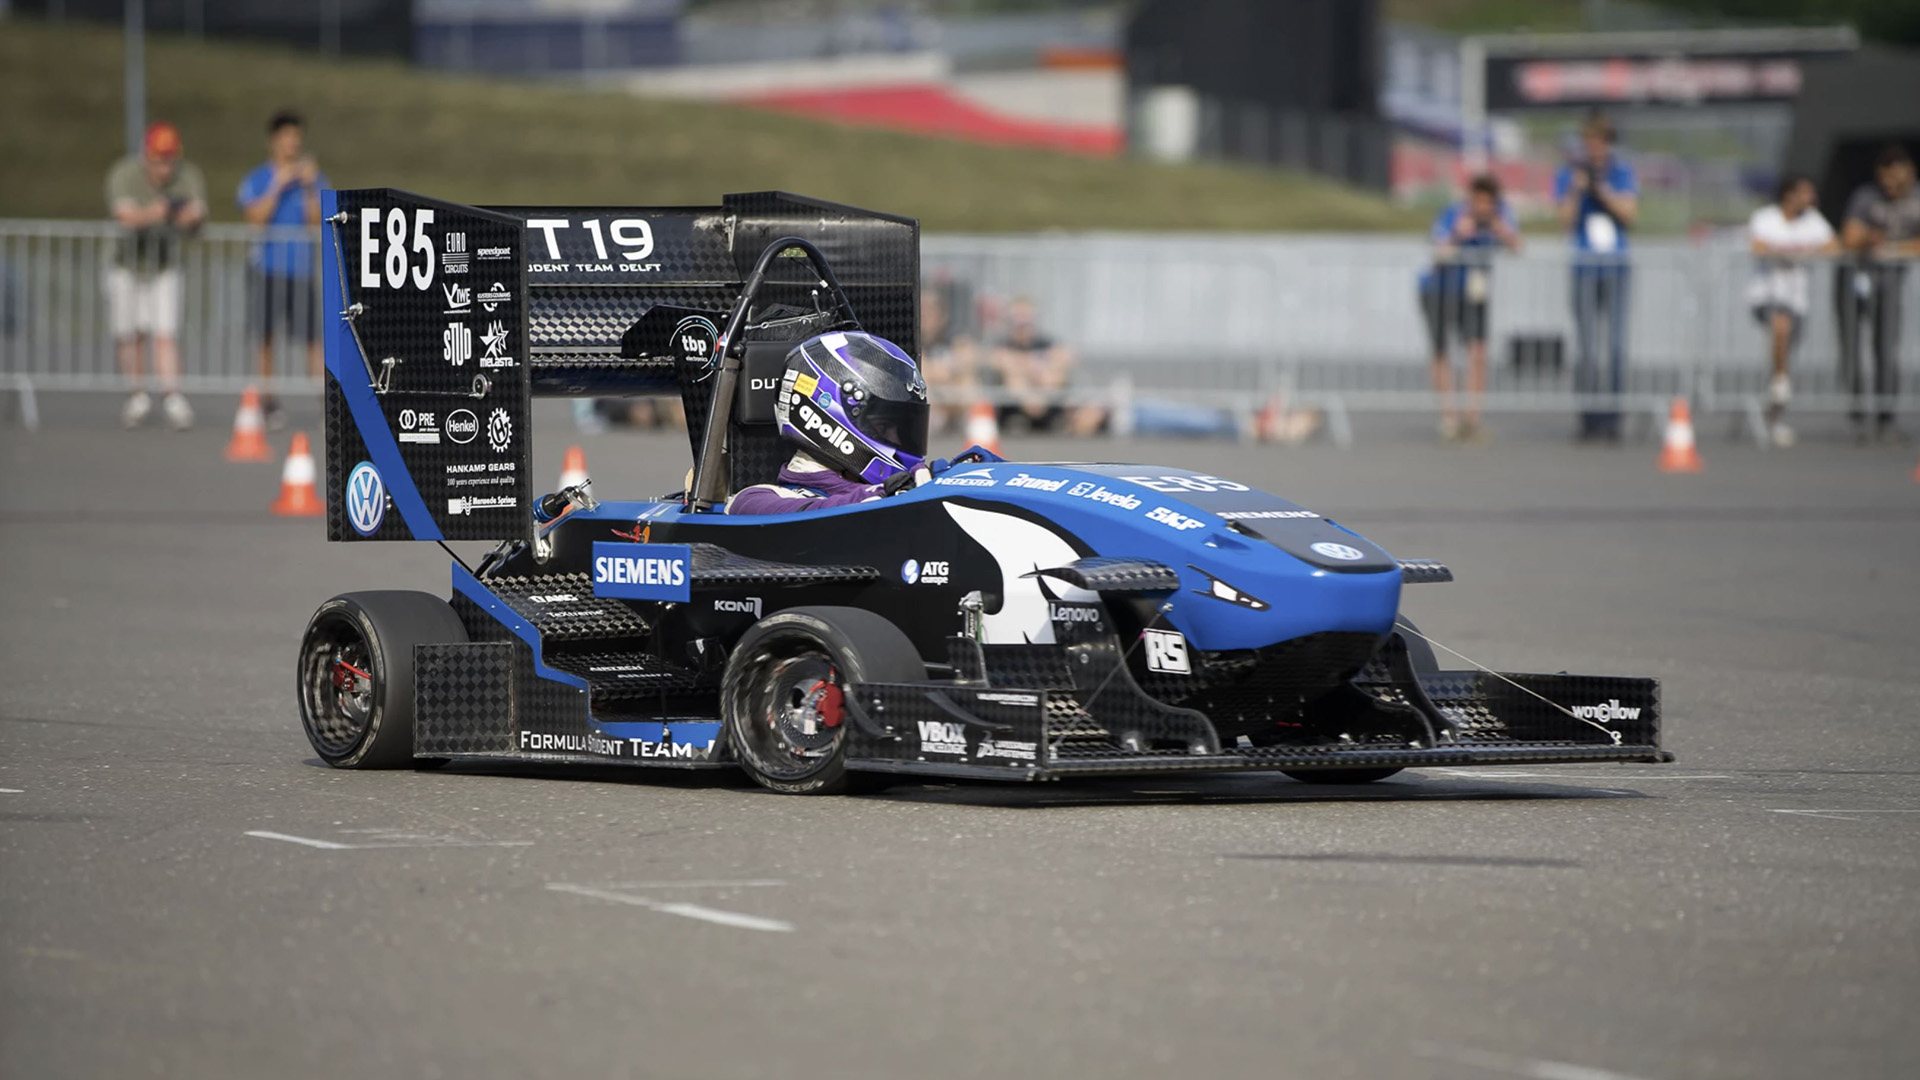 A TU Delft-designed Formula-style racecar